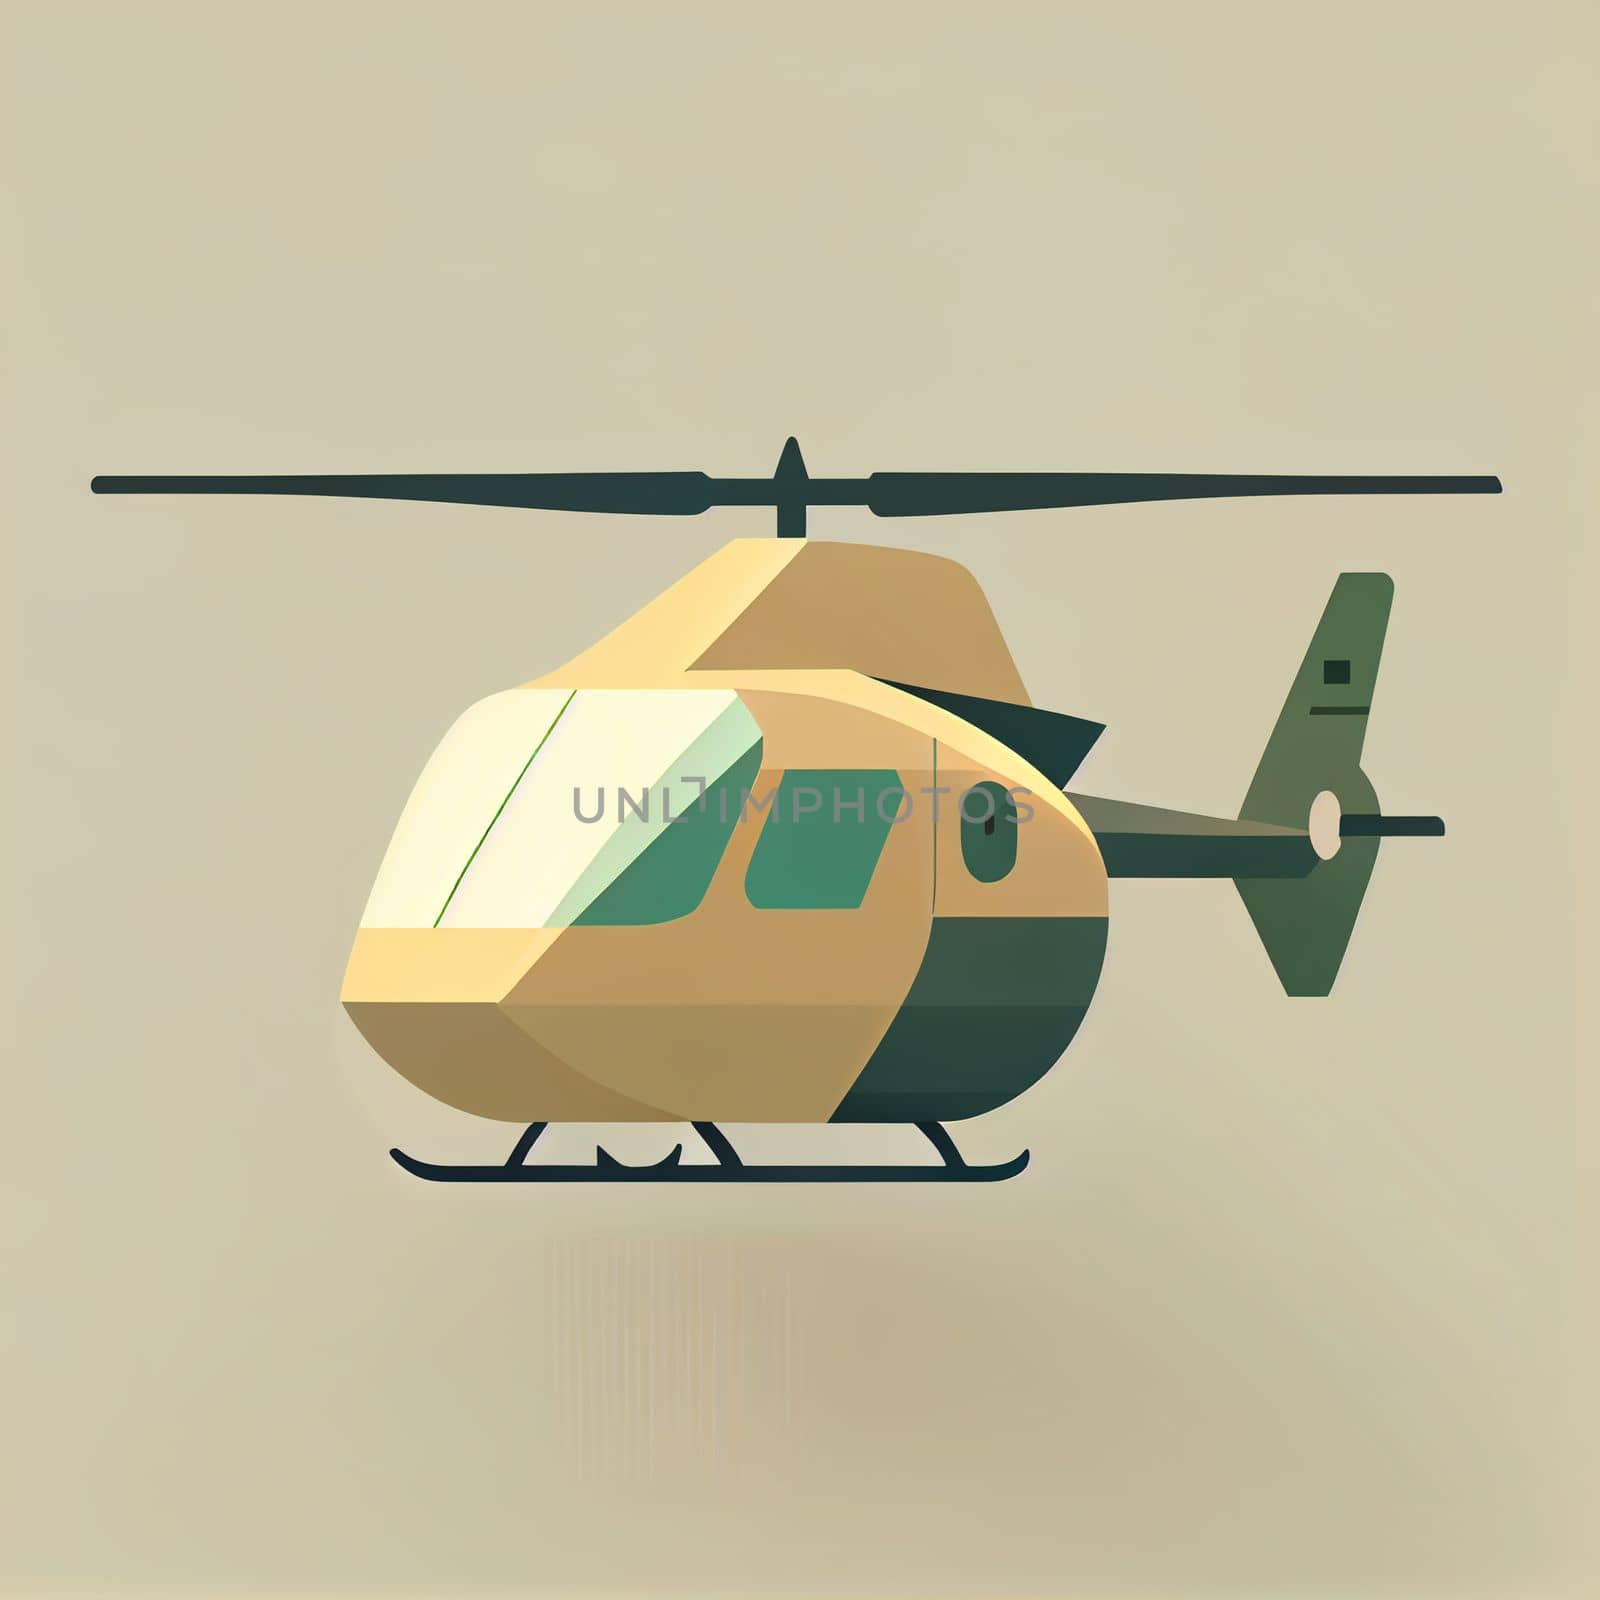 Modern flat design of Transport public transportable helicopter for transportation in city. by FokasuArt